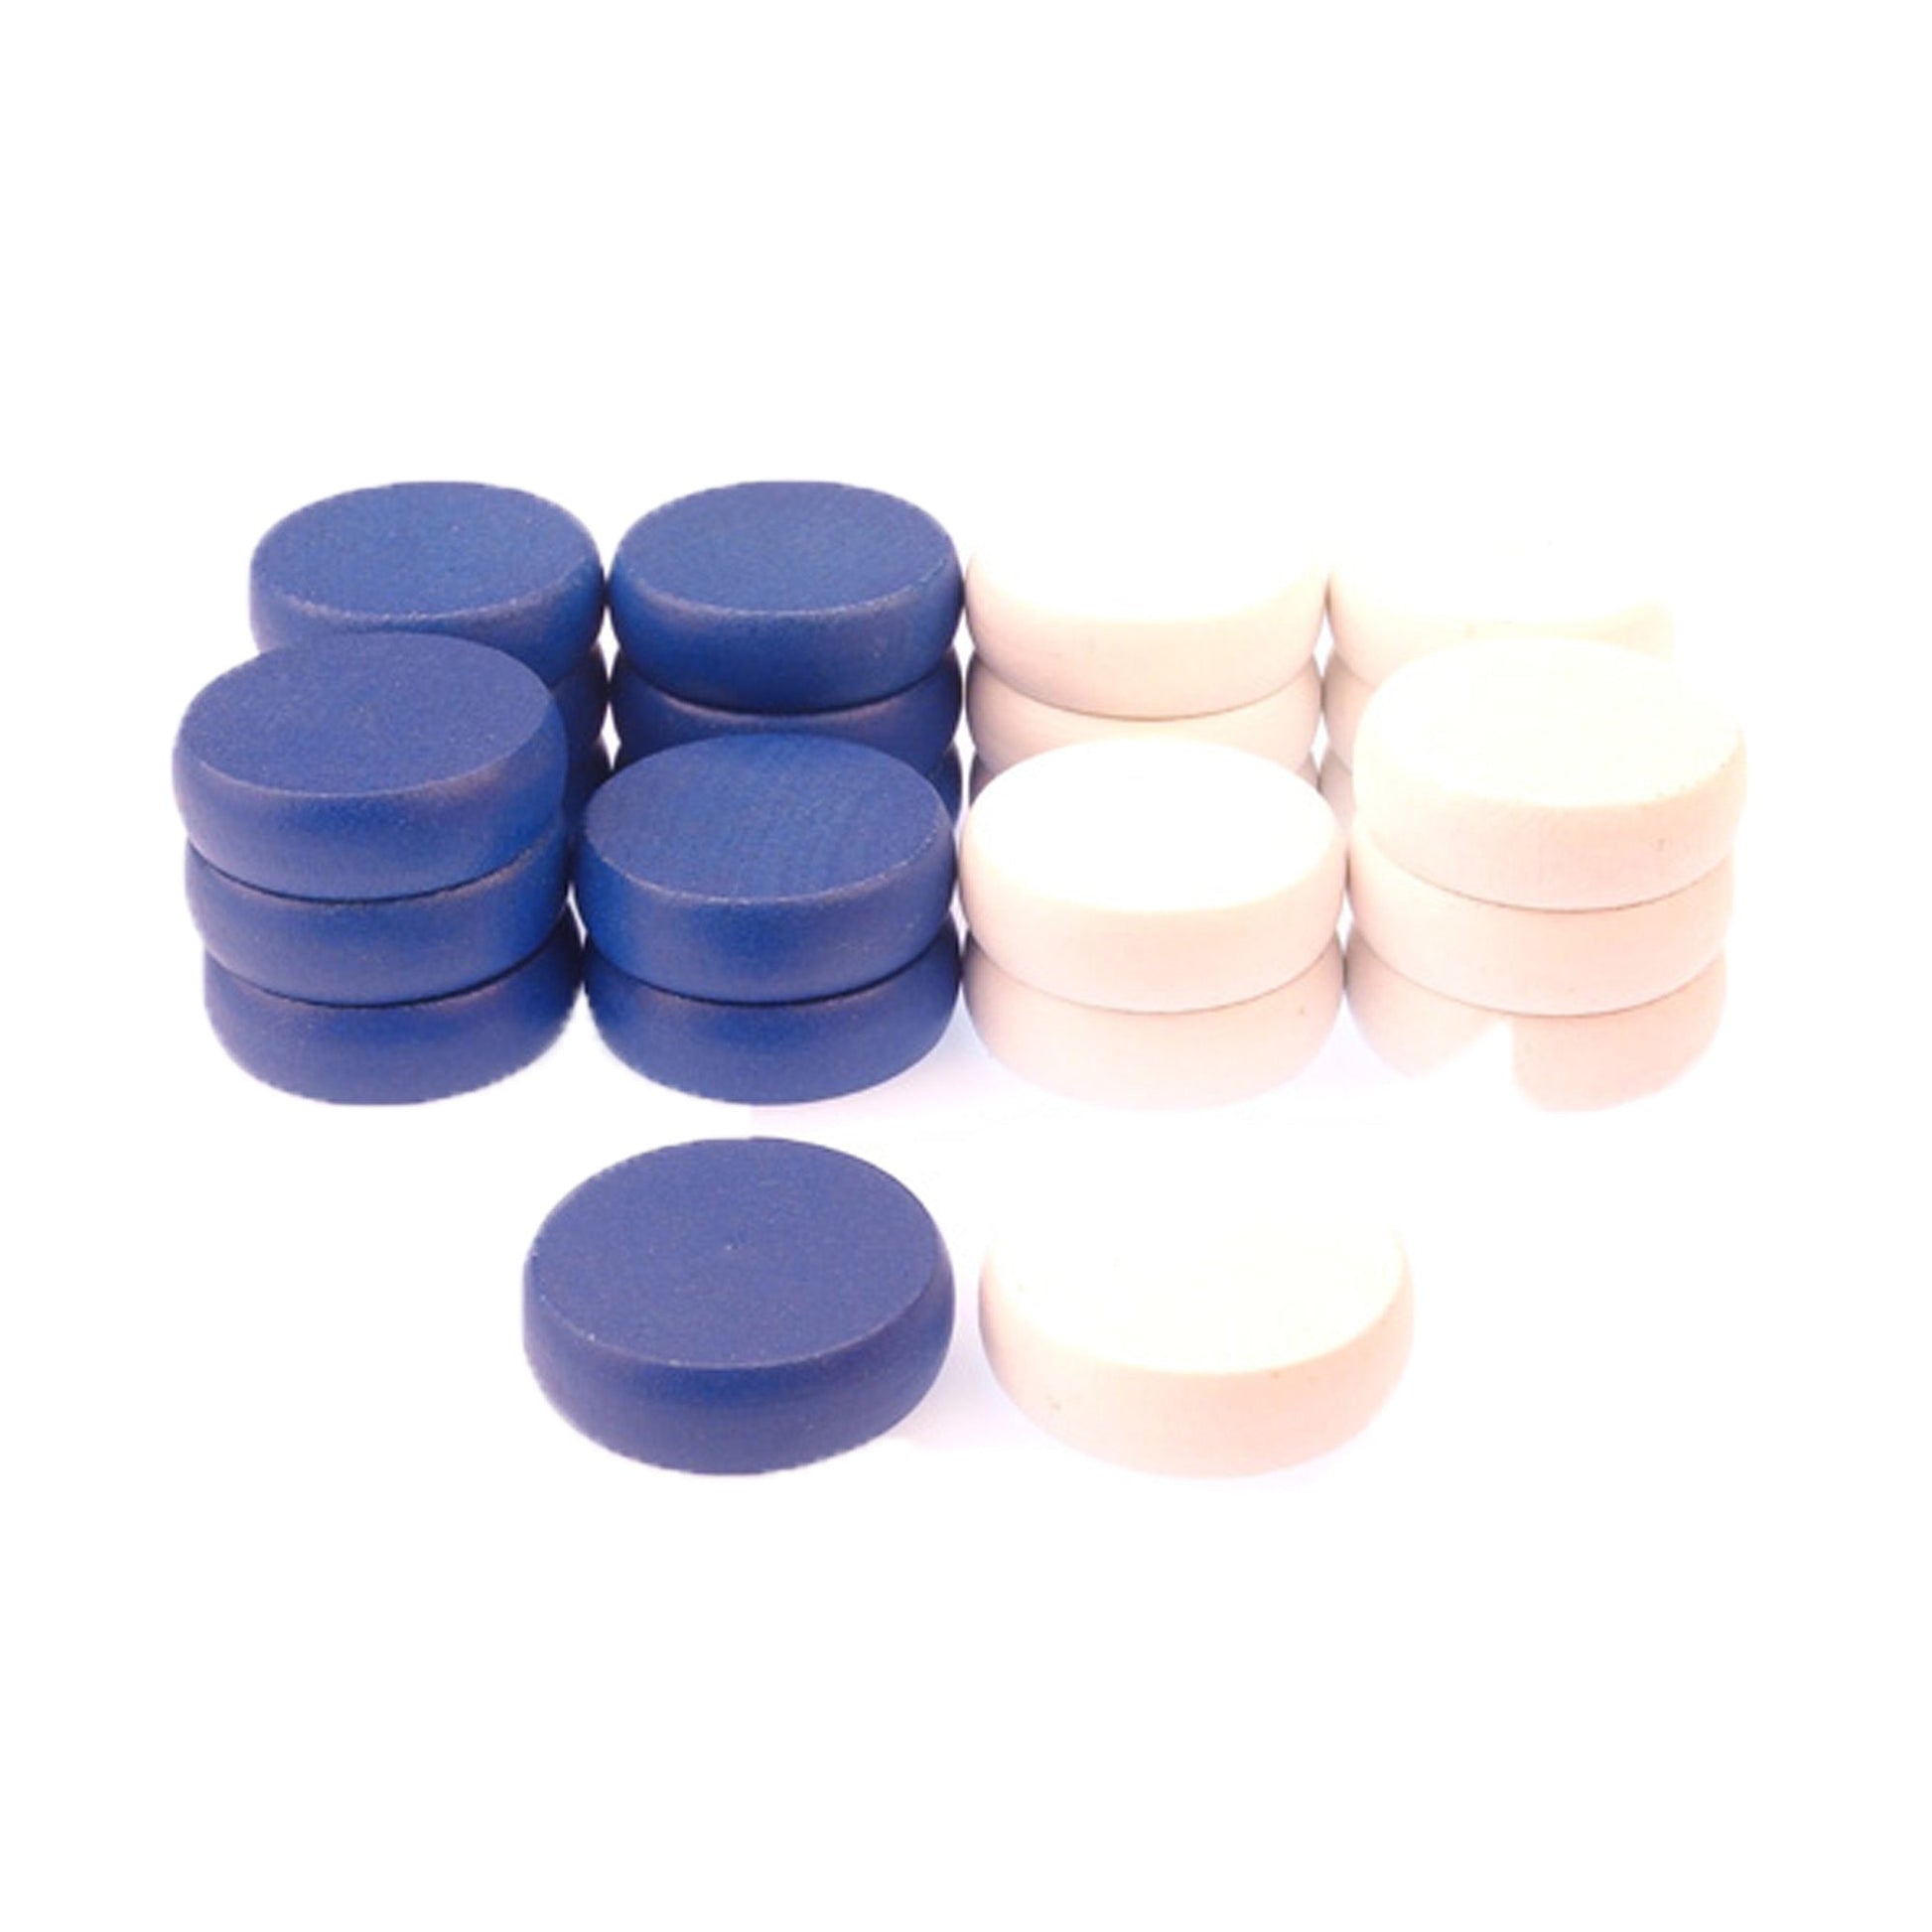 26-blue-white crokinole tournament discs